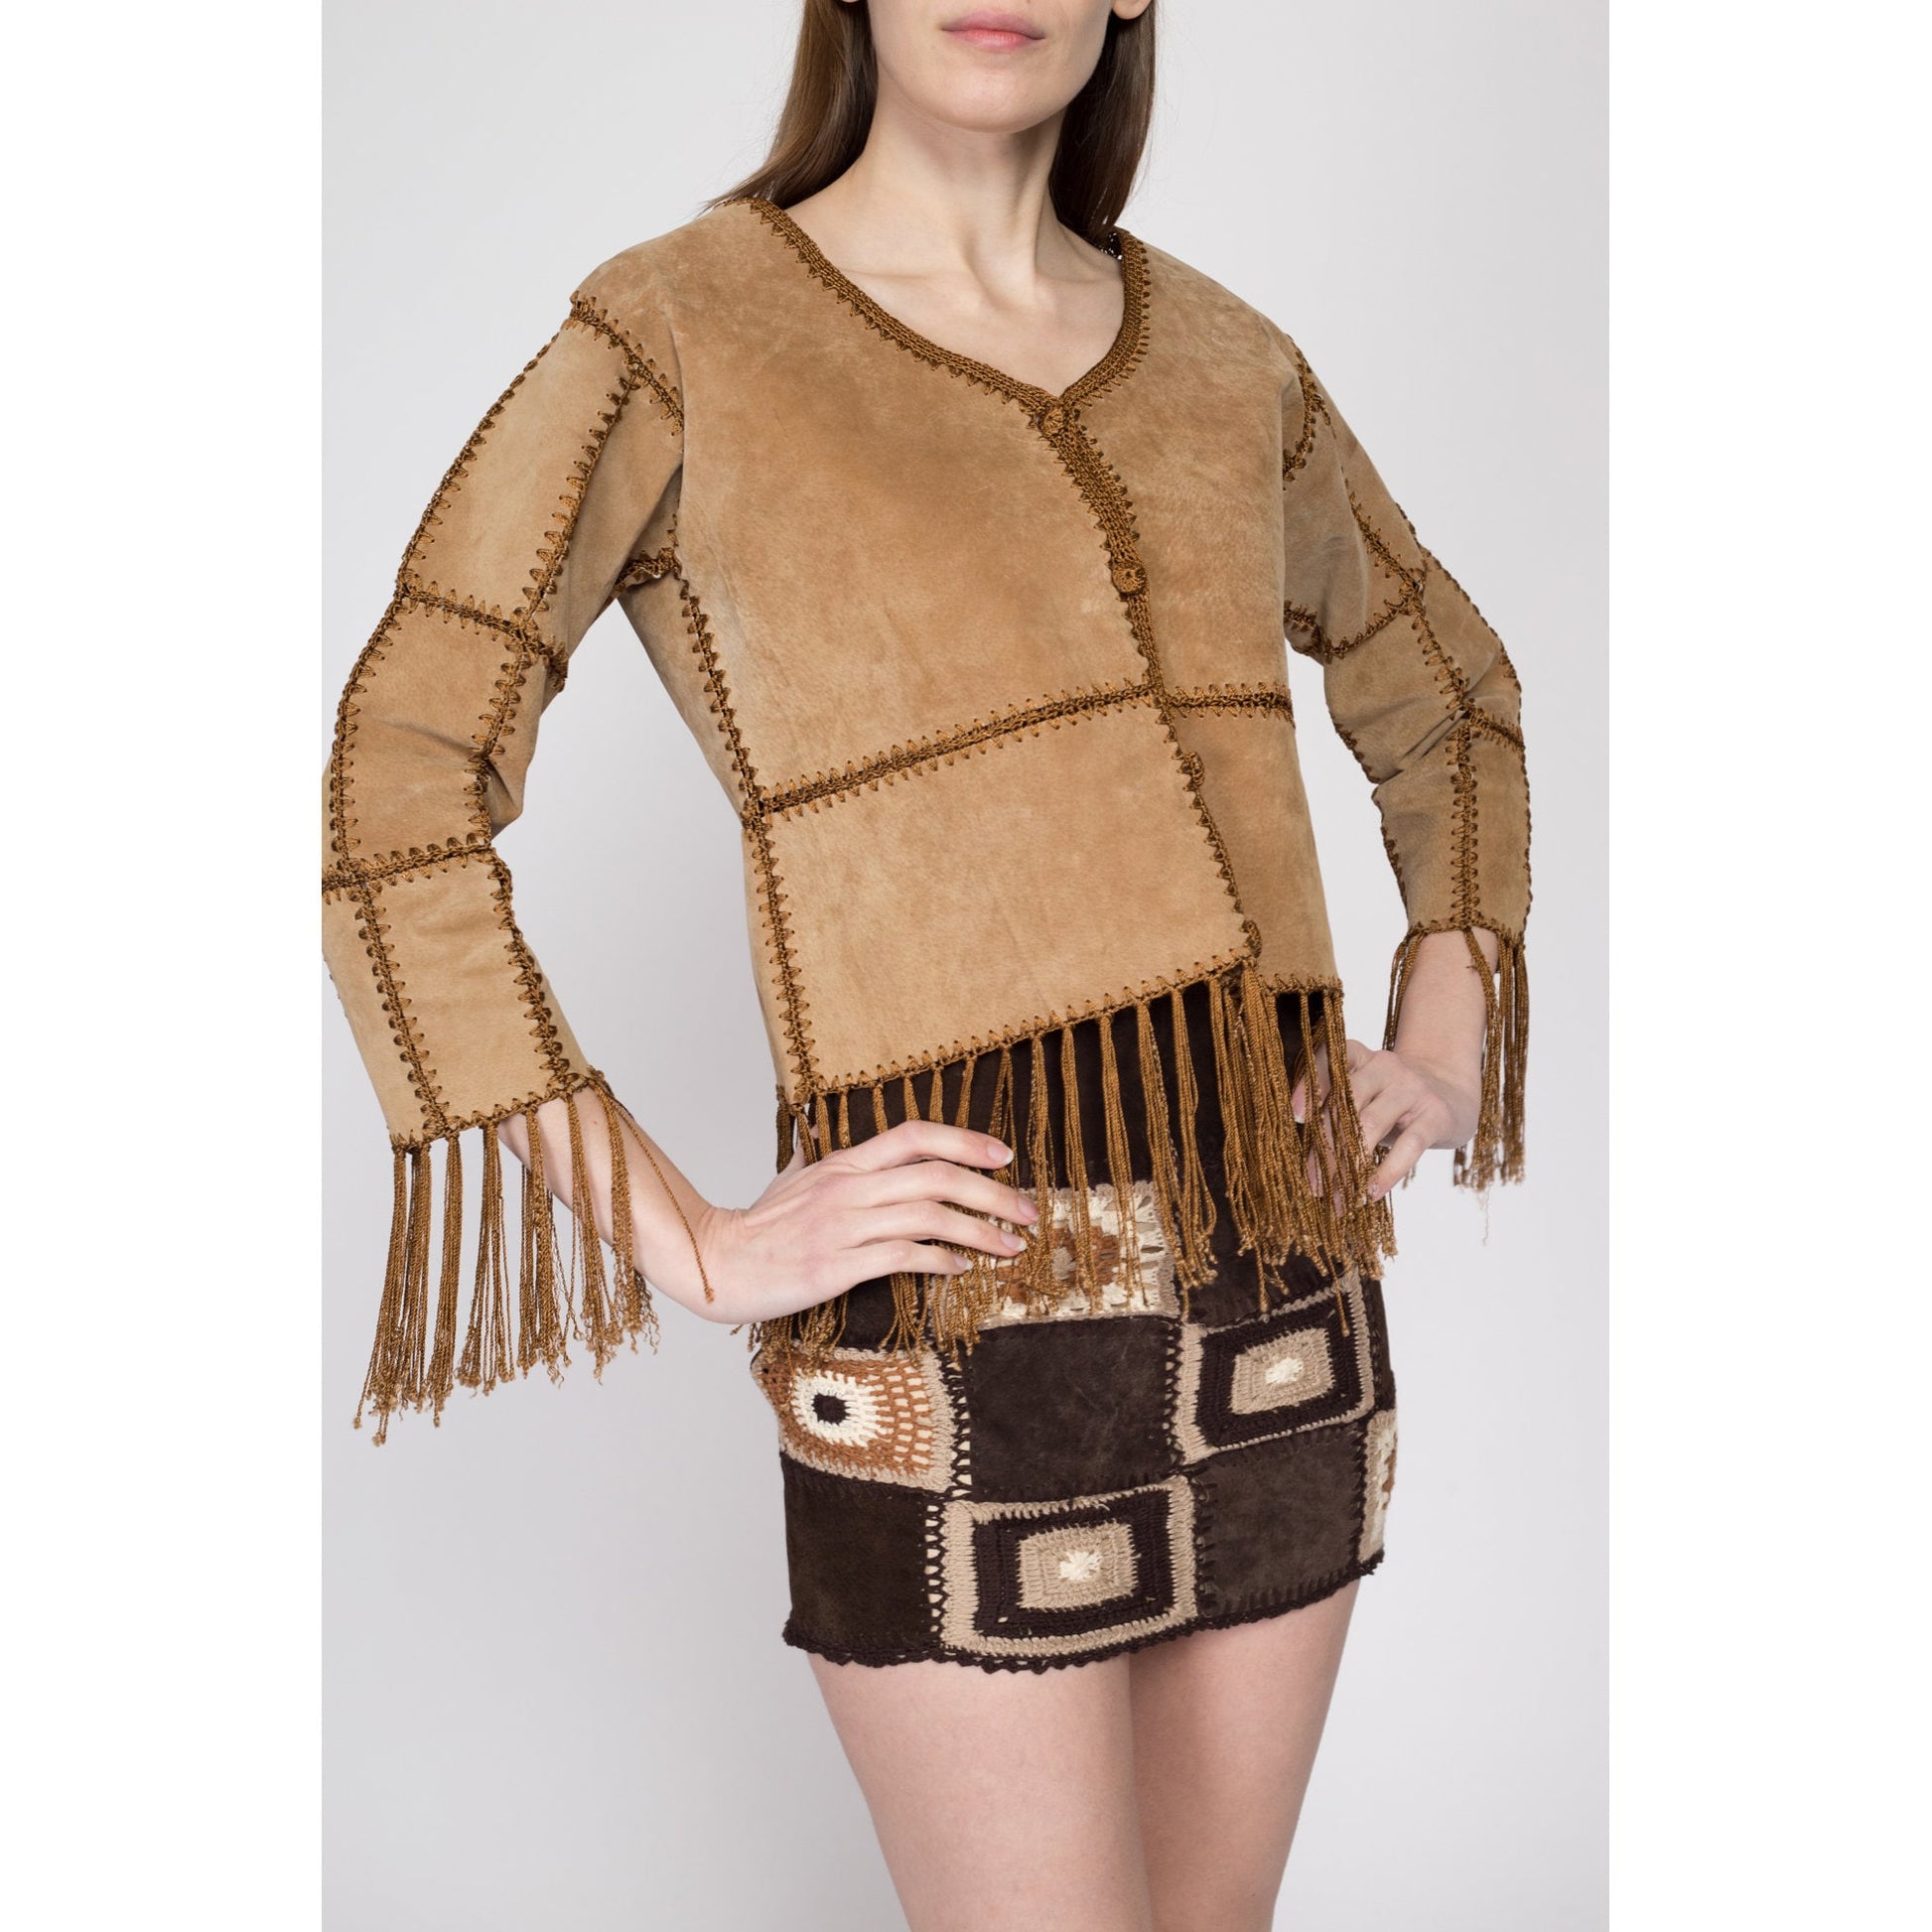 Small 90s Suede Knit Patchwork Fringe Top | Vintage Kroshetta By Papillon Boho Hippie Leather Jacket